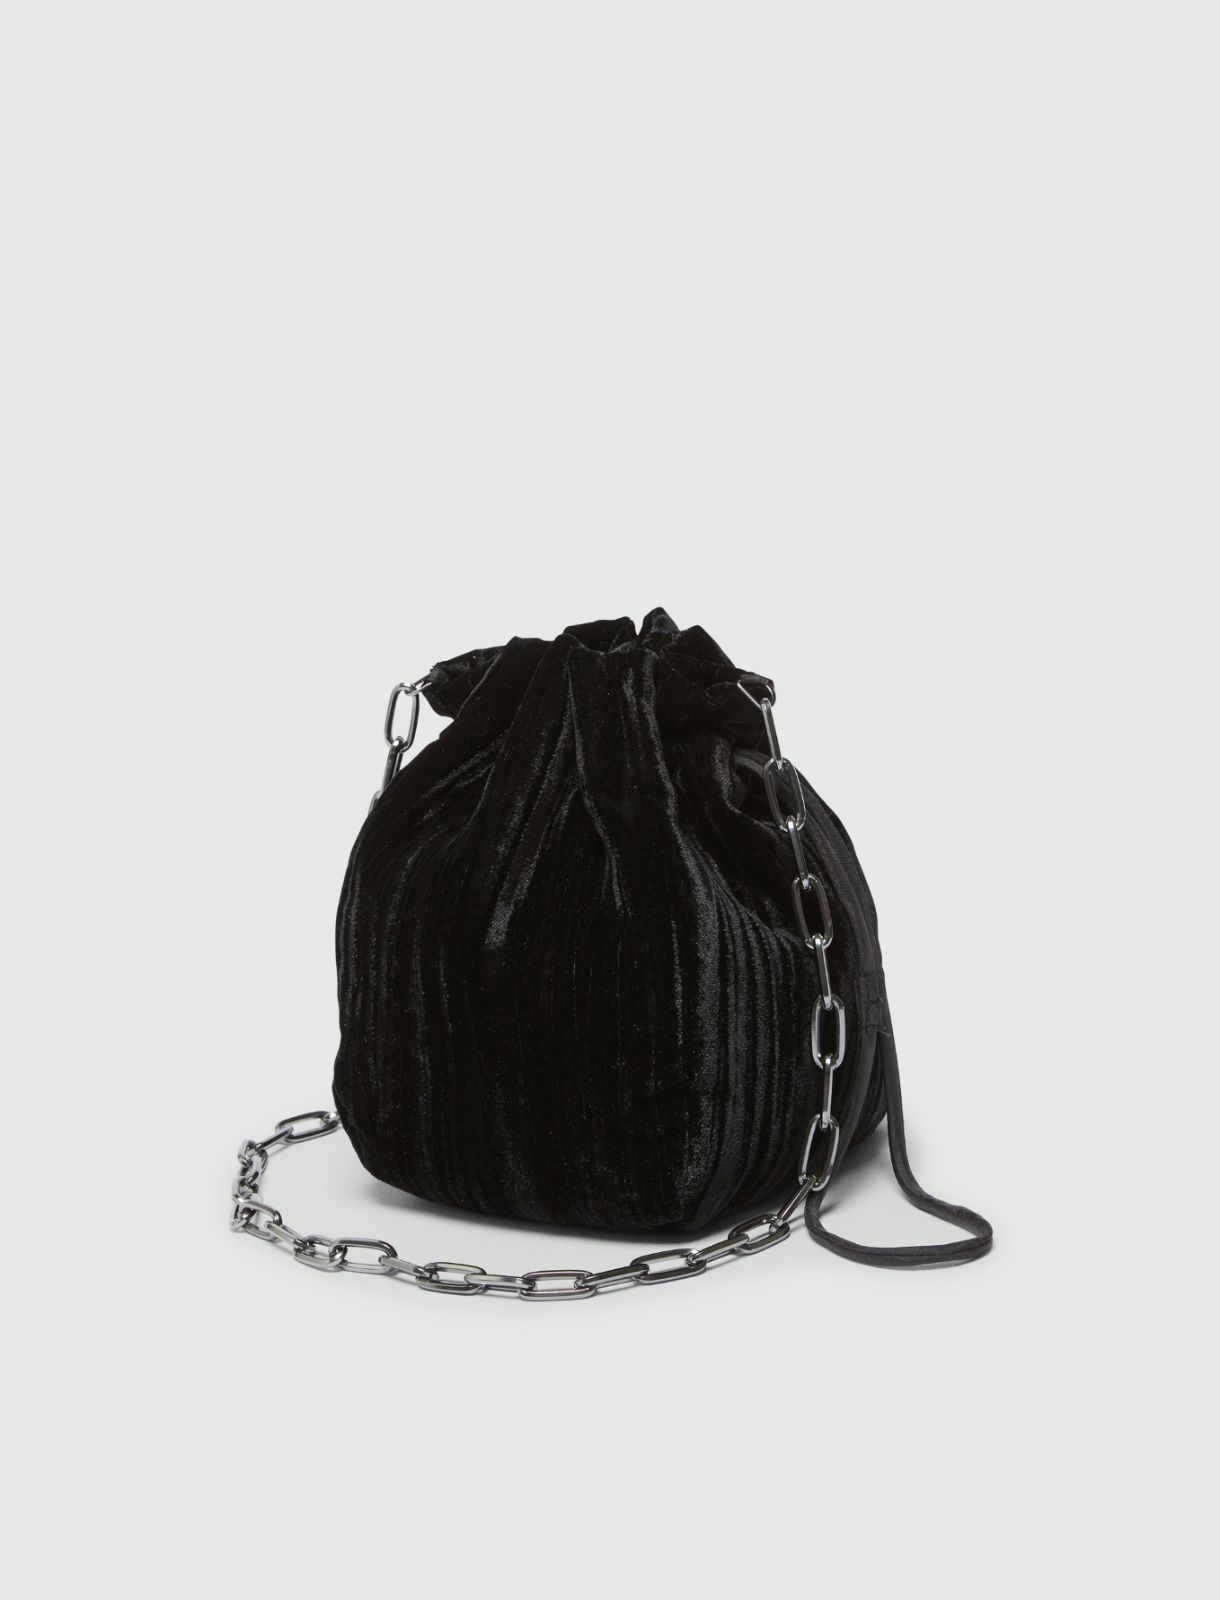 Velvet bag - Black - Marina Rinaldi - 2